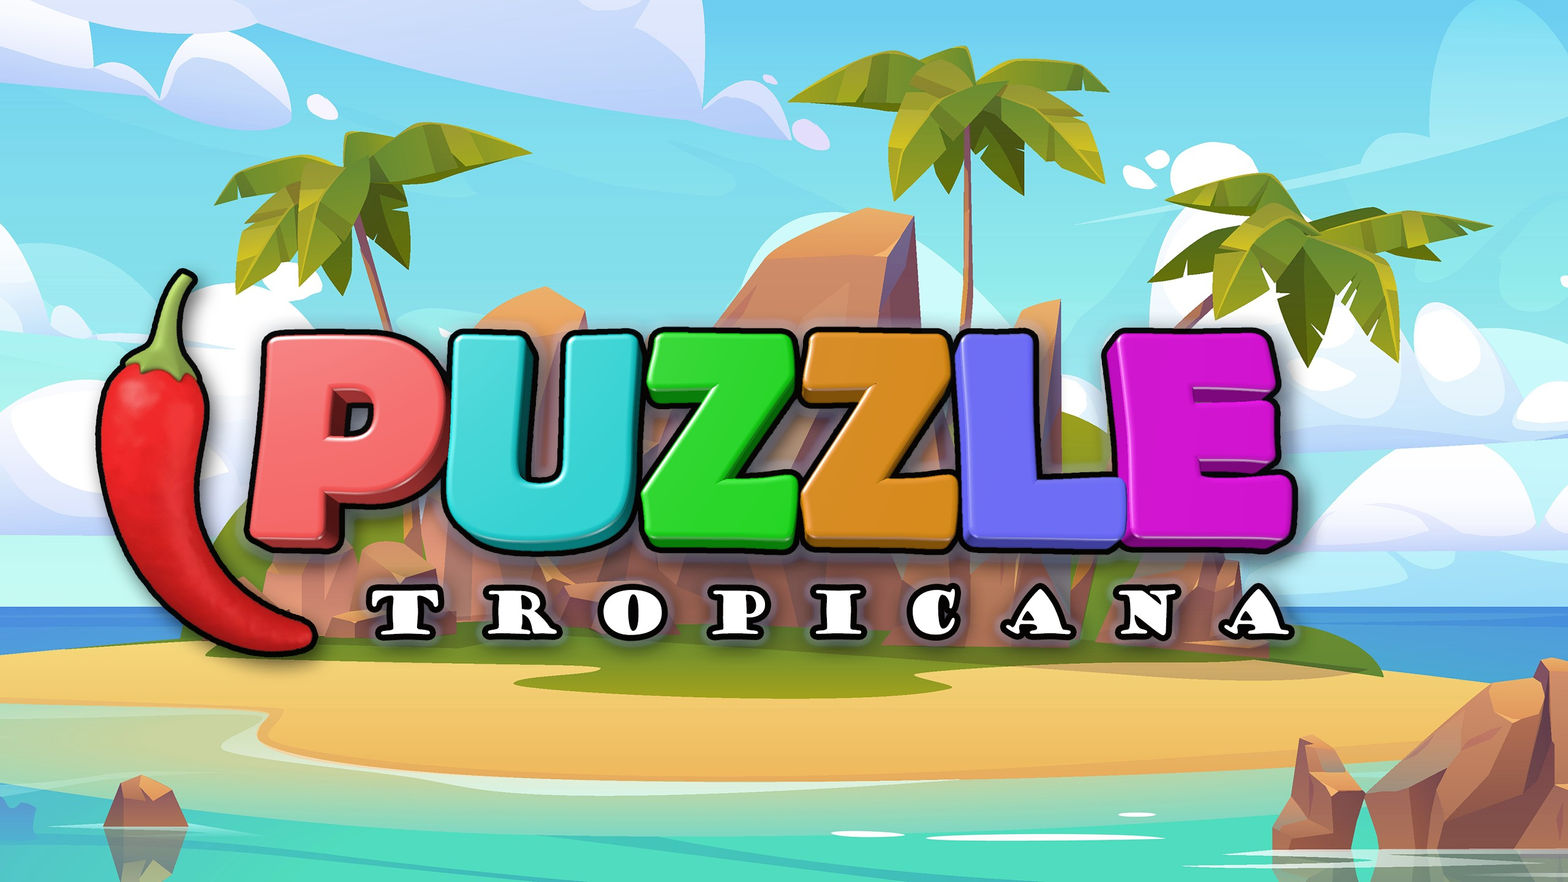 Puzzle Tropicana